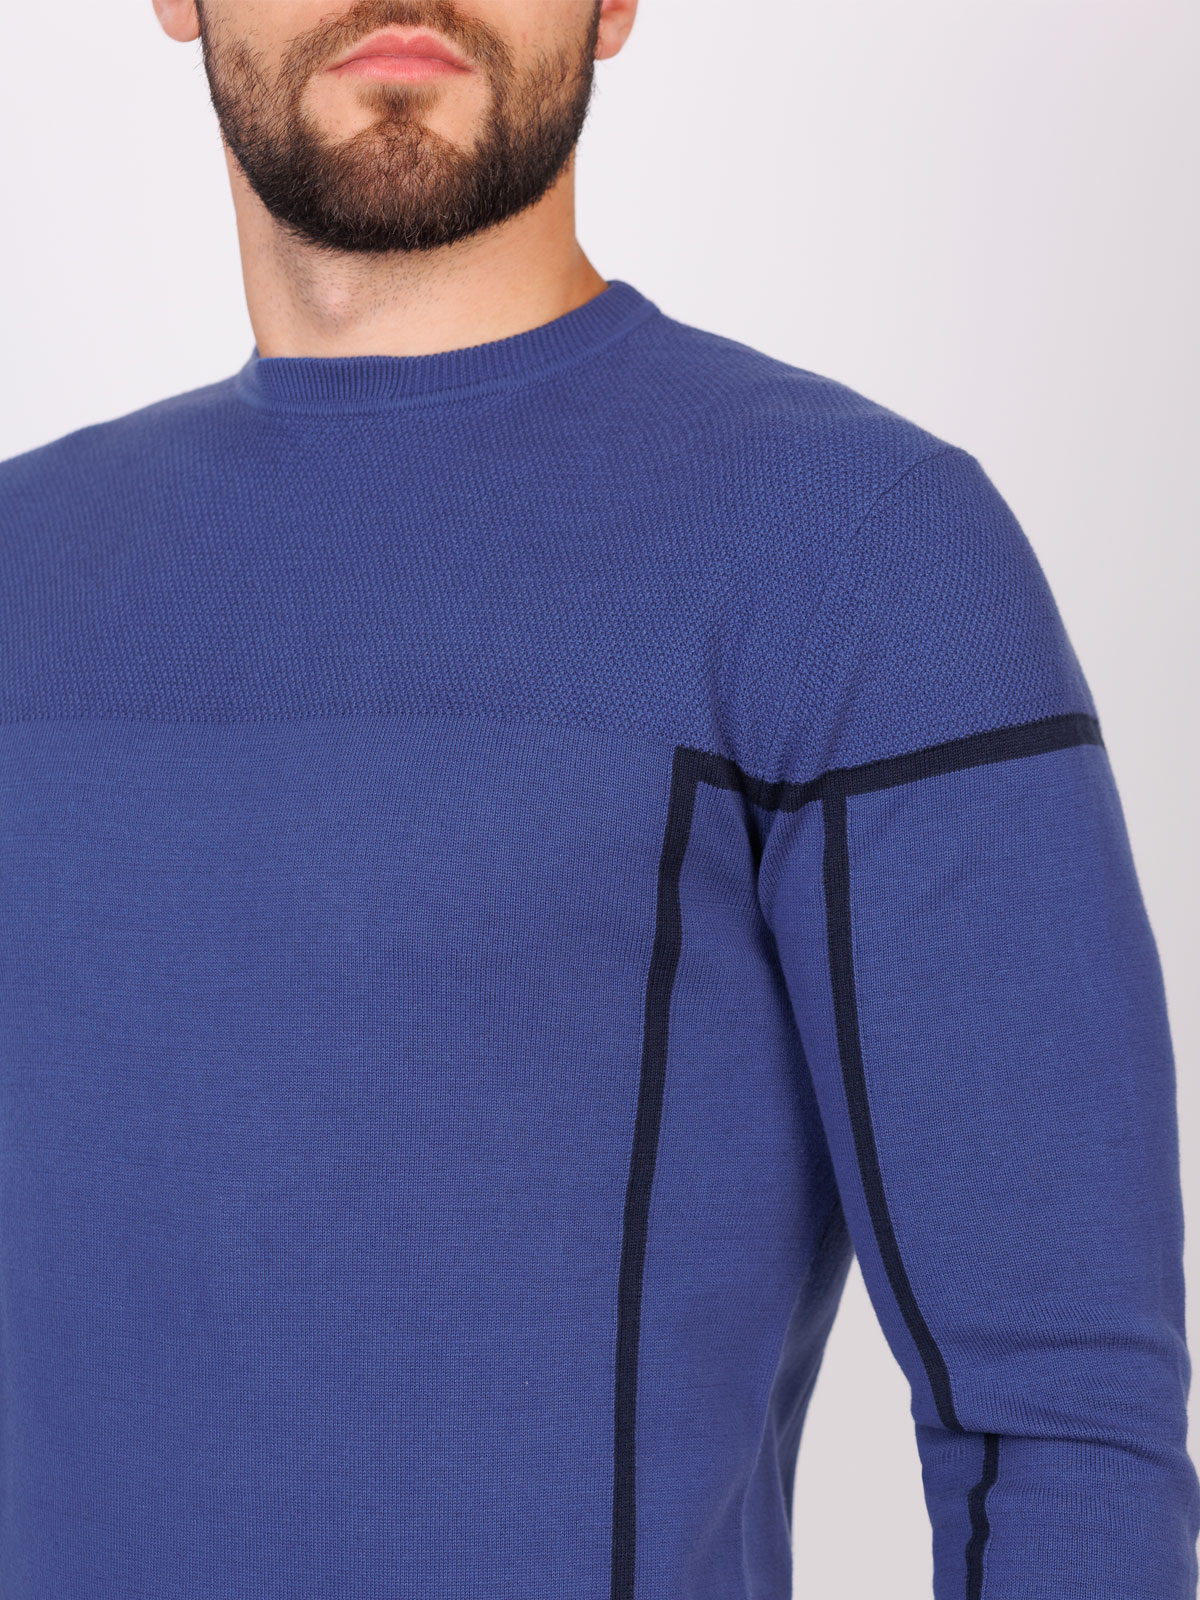 Bluza albastra cu dungi negre - 35282 € 34.87 img3